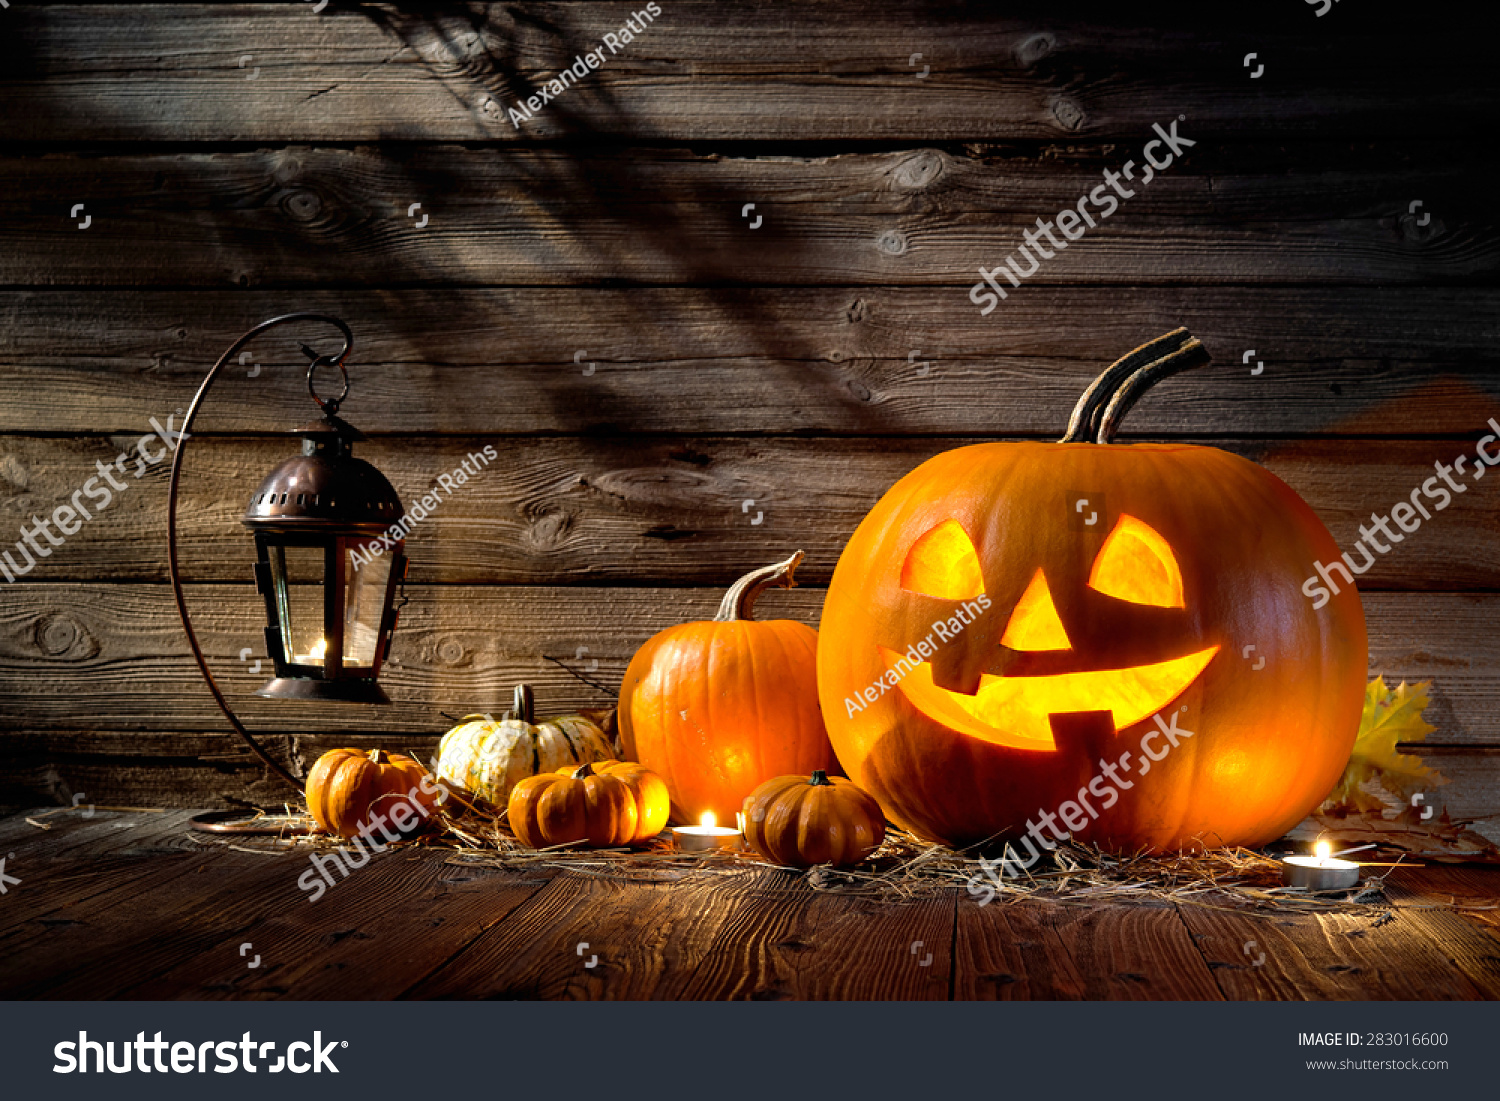 Halloween pumpkin head jack lantern on wooden background #283016600